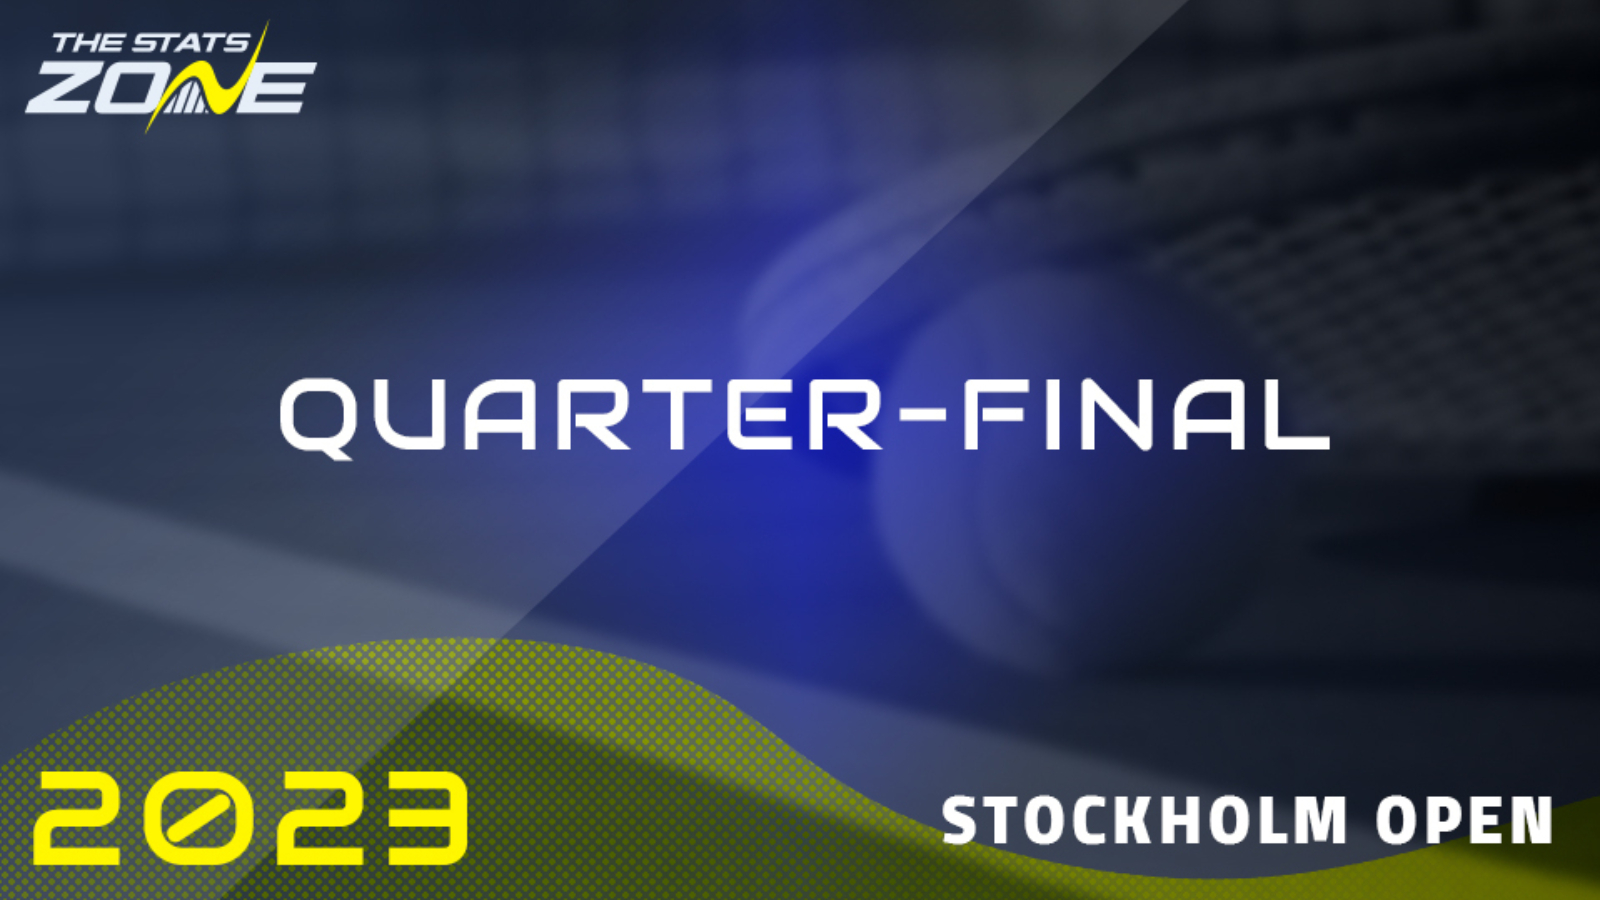 Miomir Kecmanovic vs Elias Ymer Preview and Prediction 2023 Stockholm Open Quarter-Final